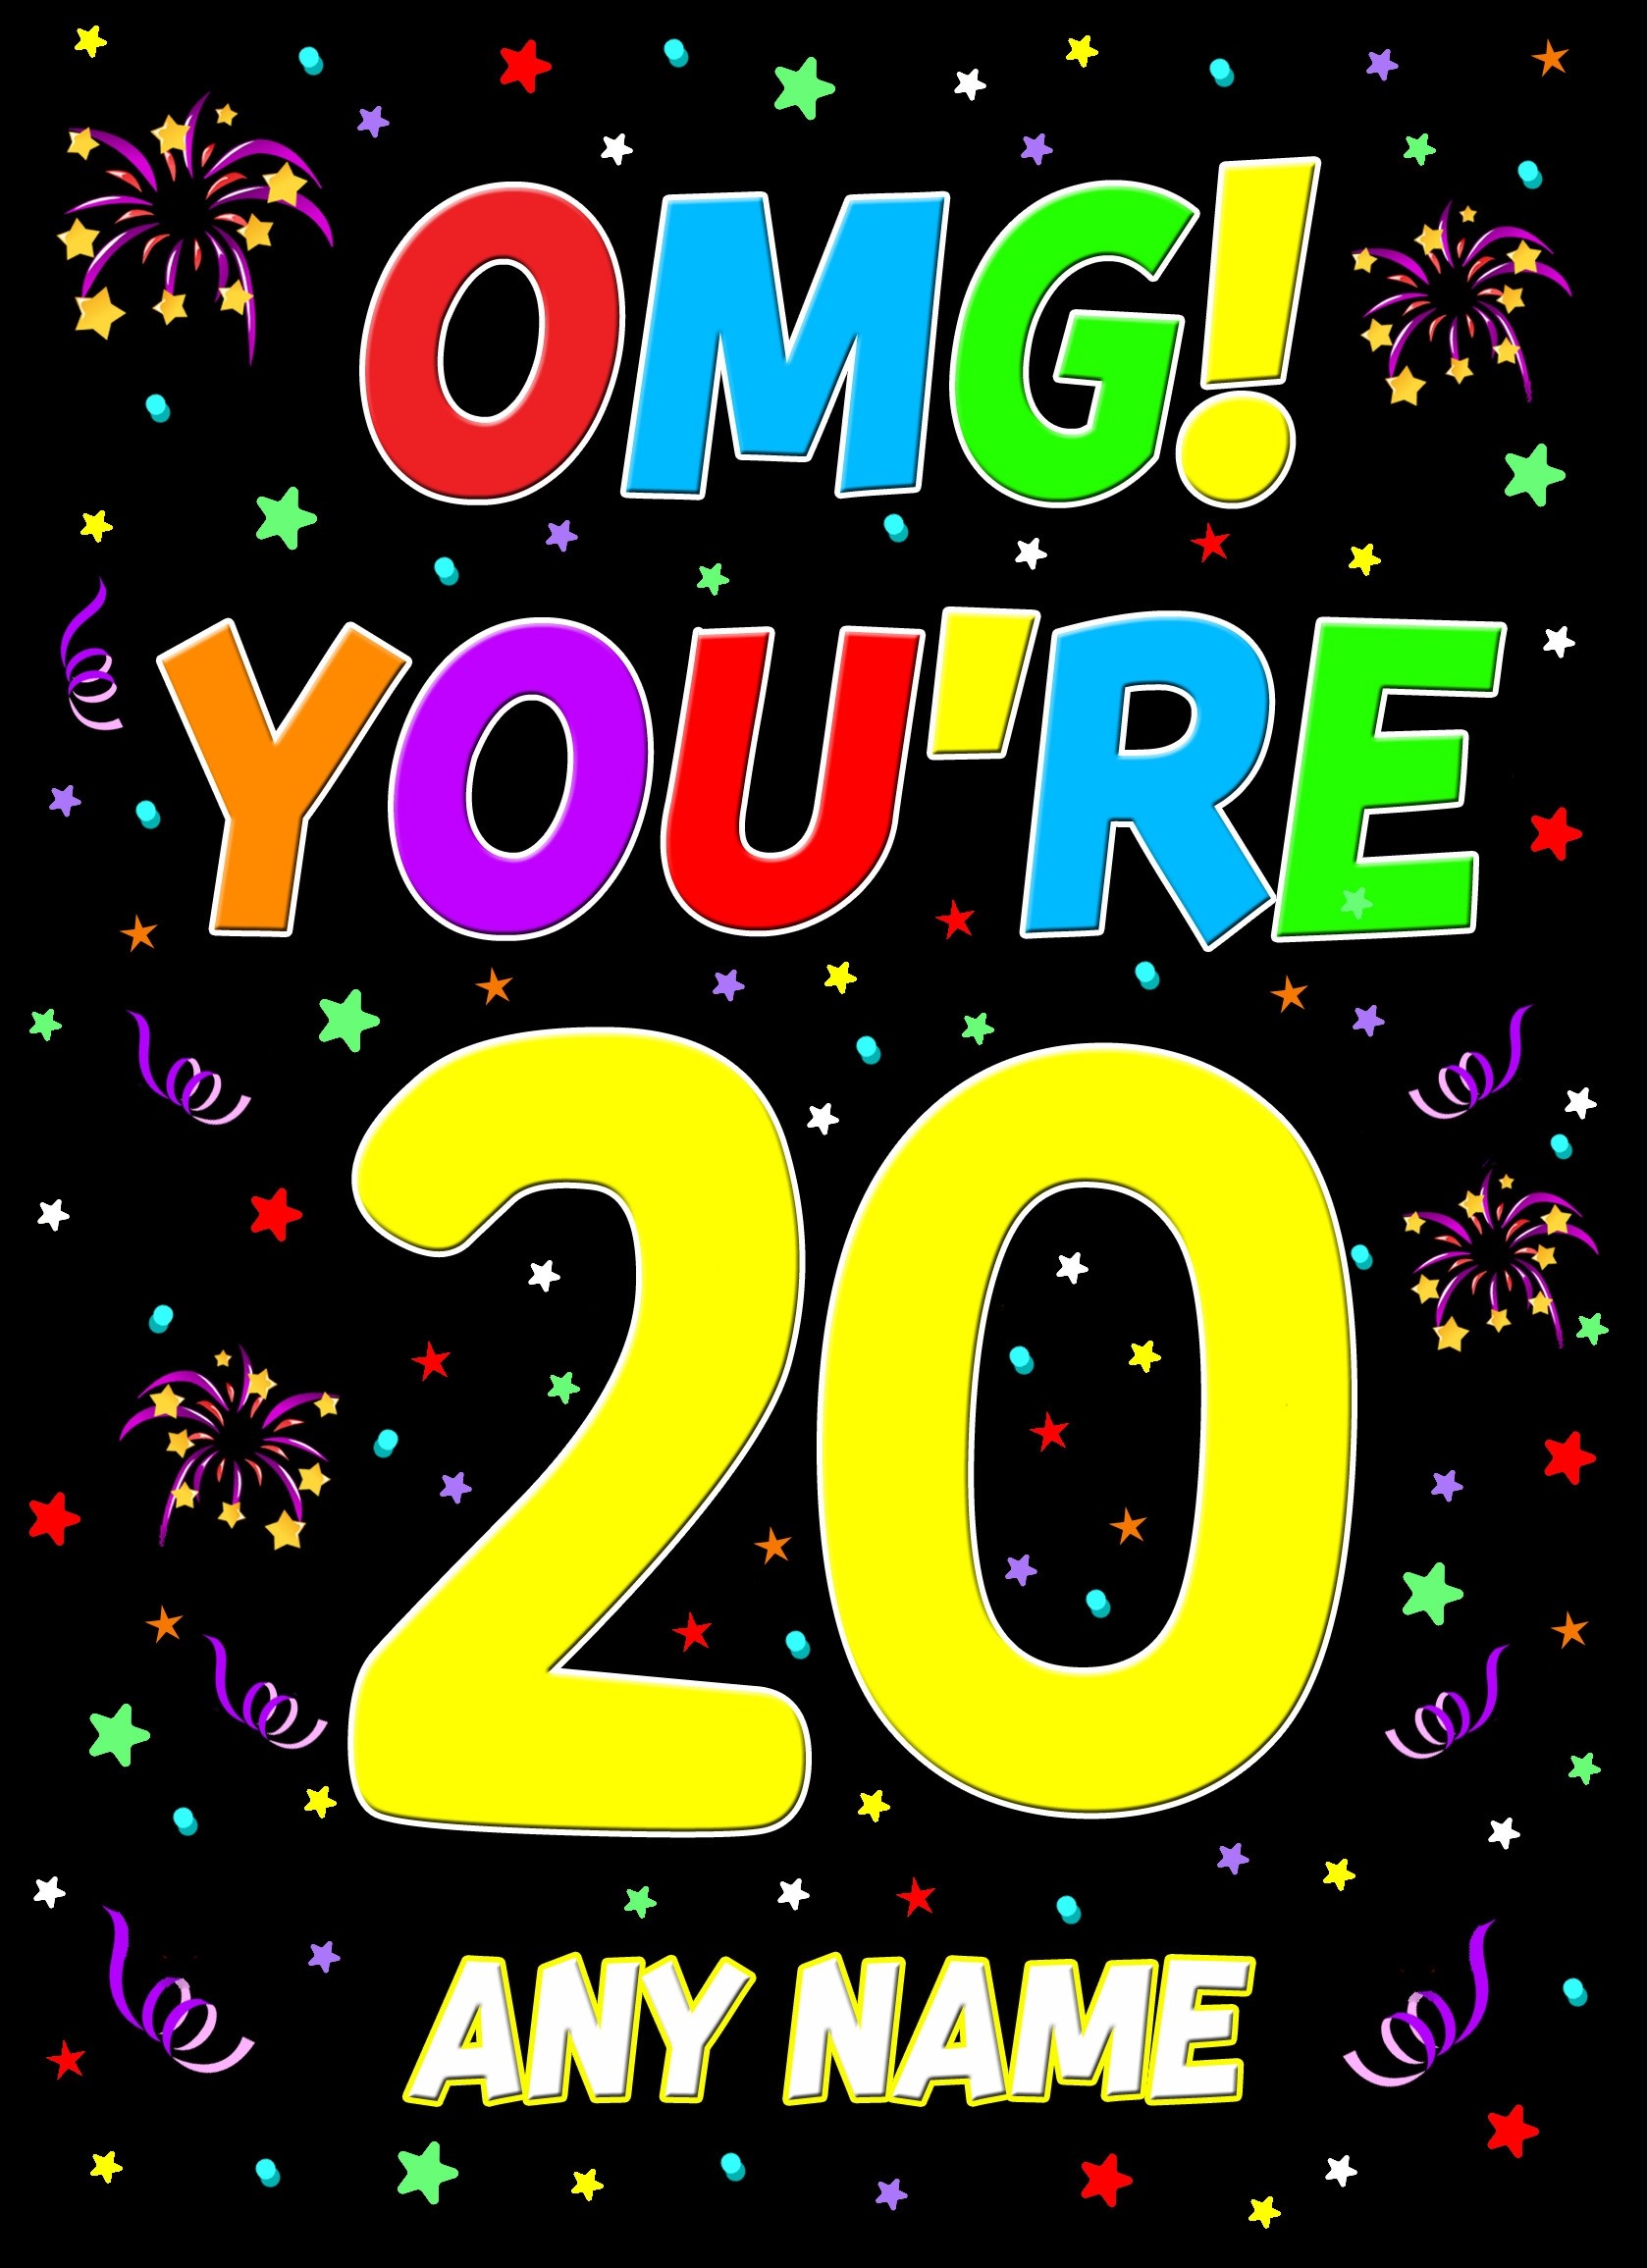 Personalised 20th Birthday Card (OMG)